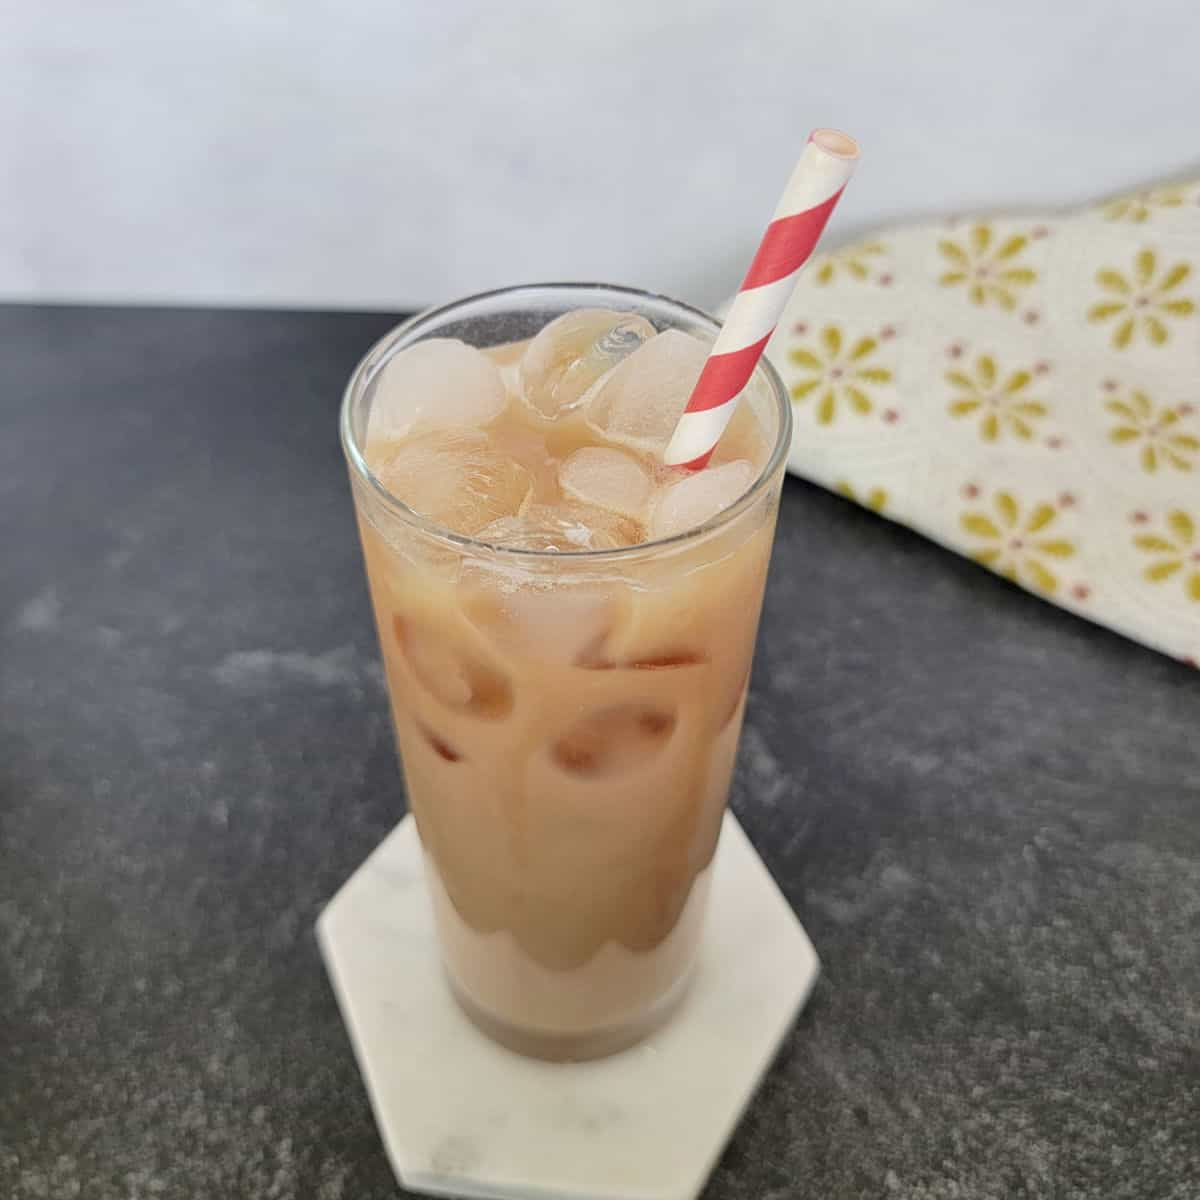 Homemade Chai Tea Recipe (Hot or Iced)